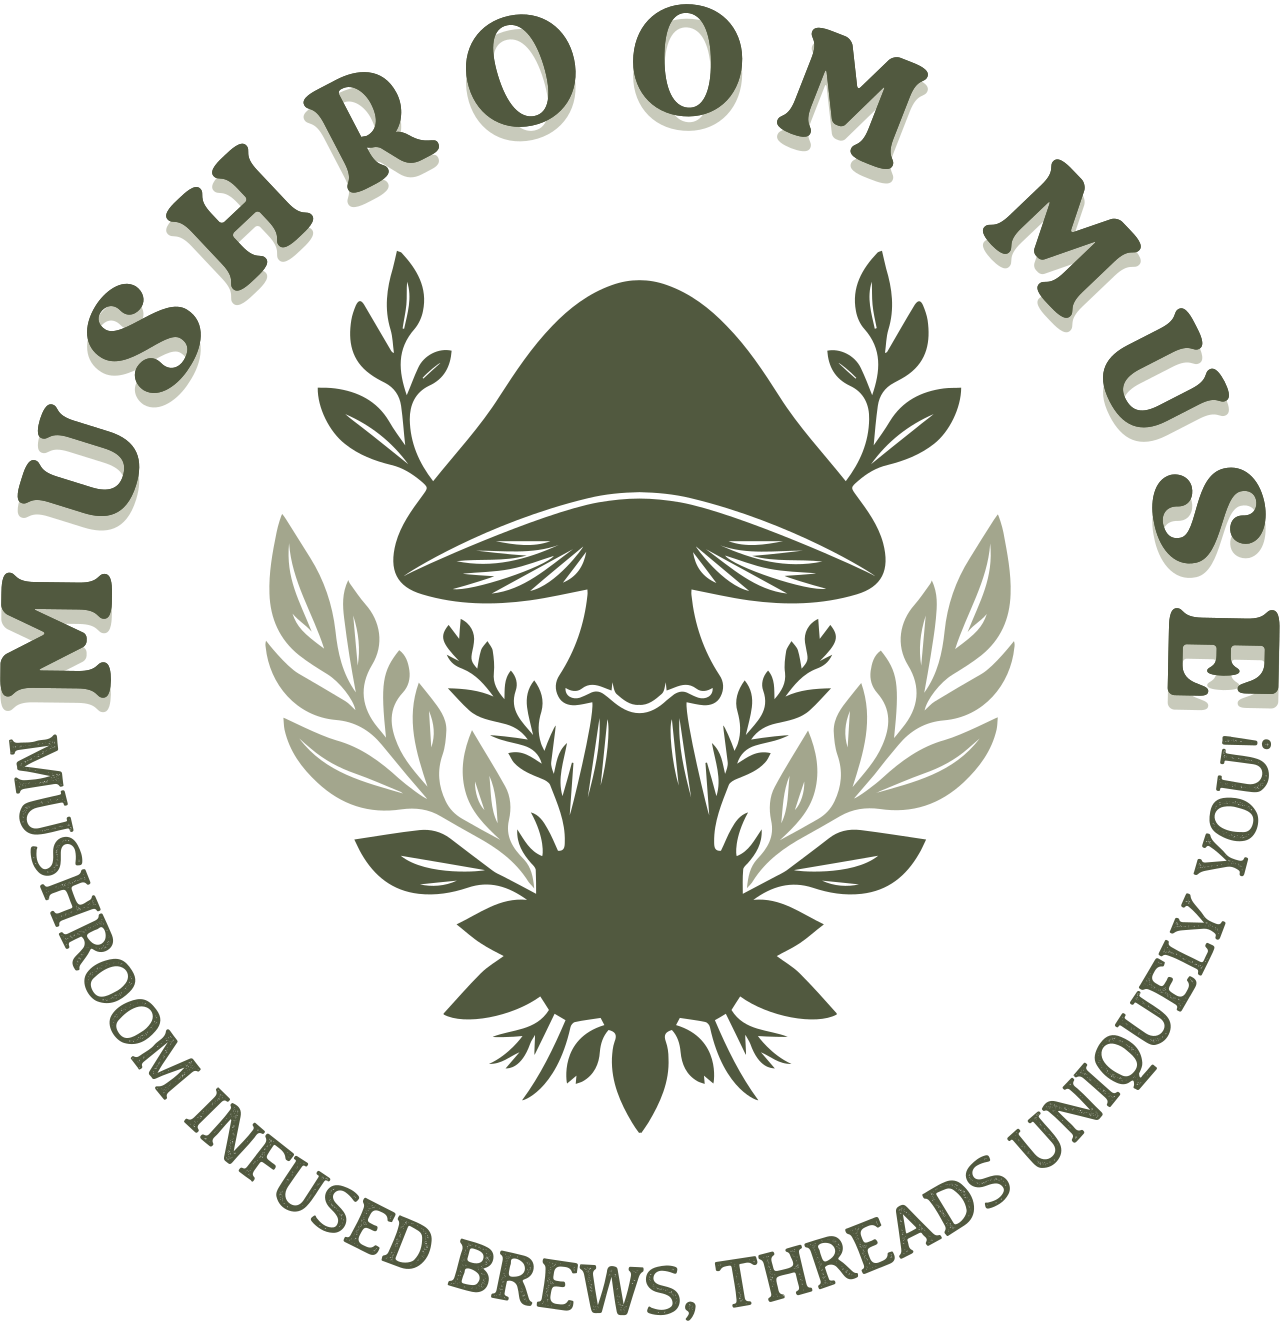 mushroom muse's logo